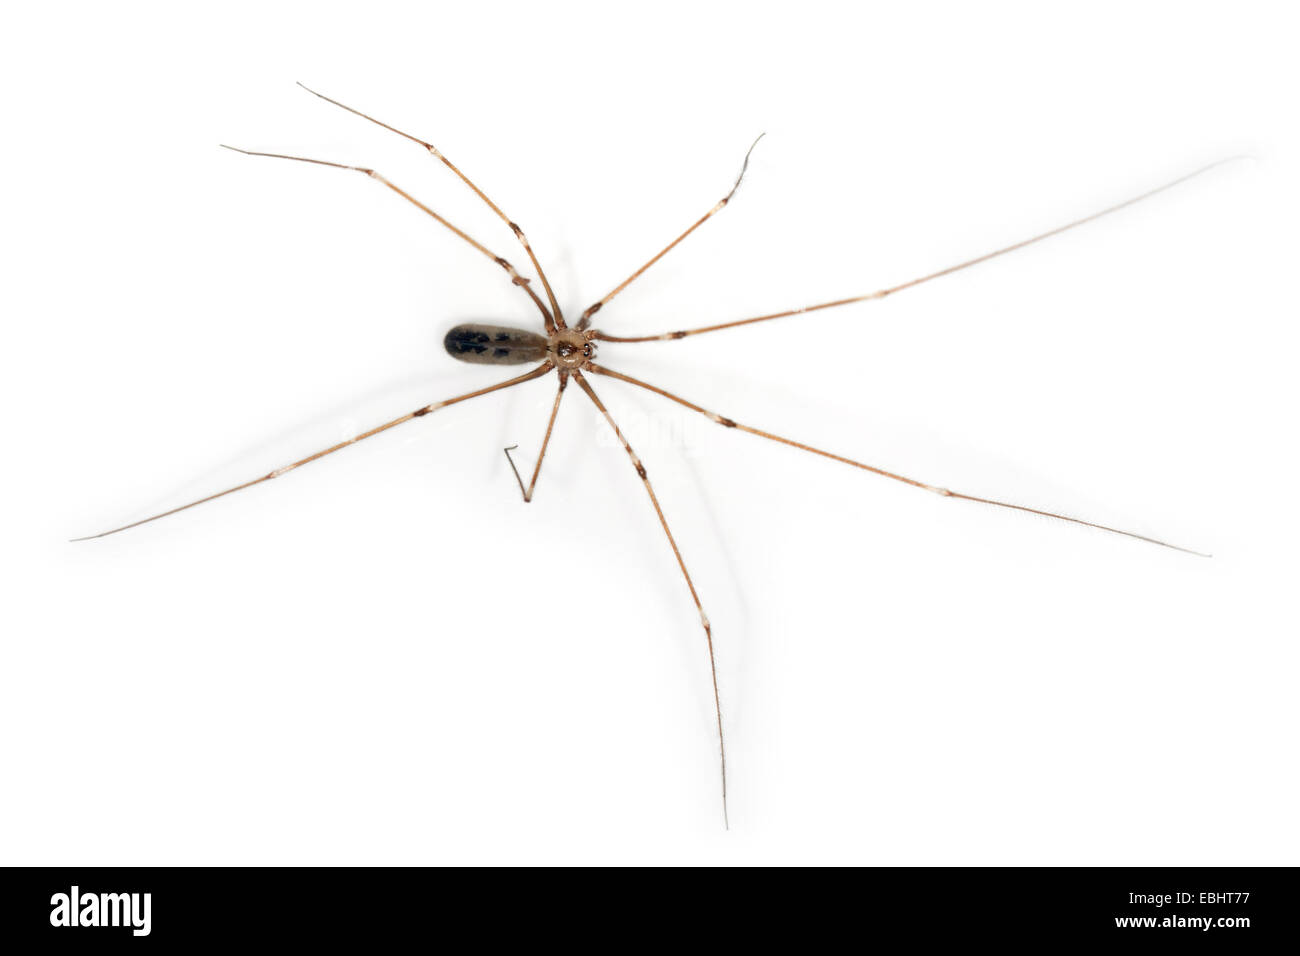 Cantina femmina spider (Pholcus phalangioides), su uno sfondo bianco, parte dell'famile Pholcidae, cantina o Daddylongleg ragni. Foto Stock